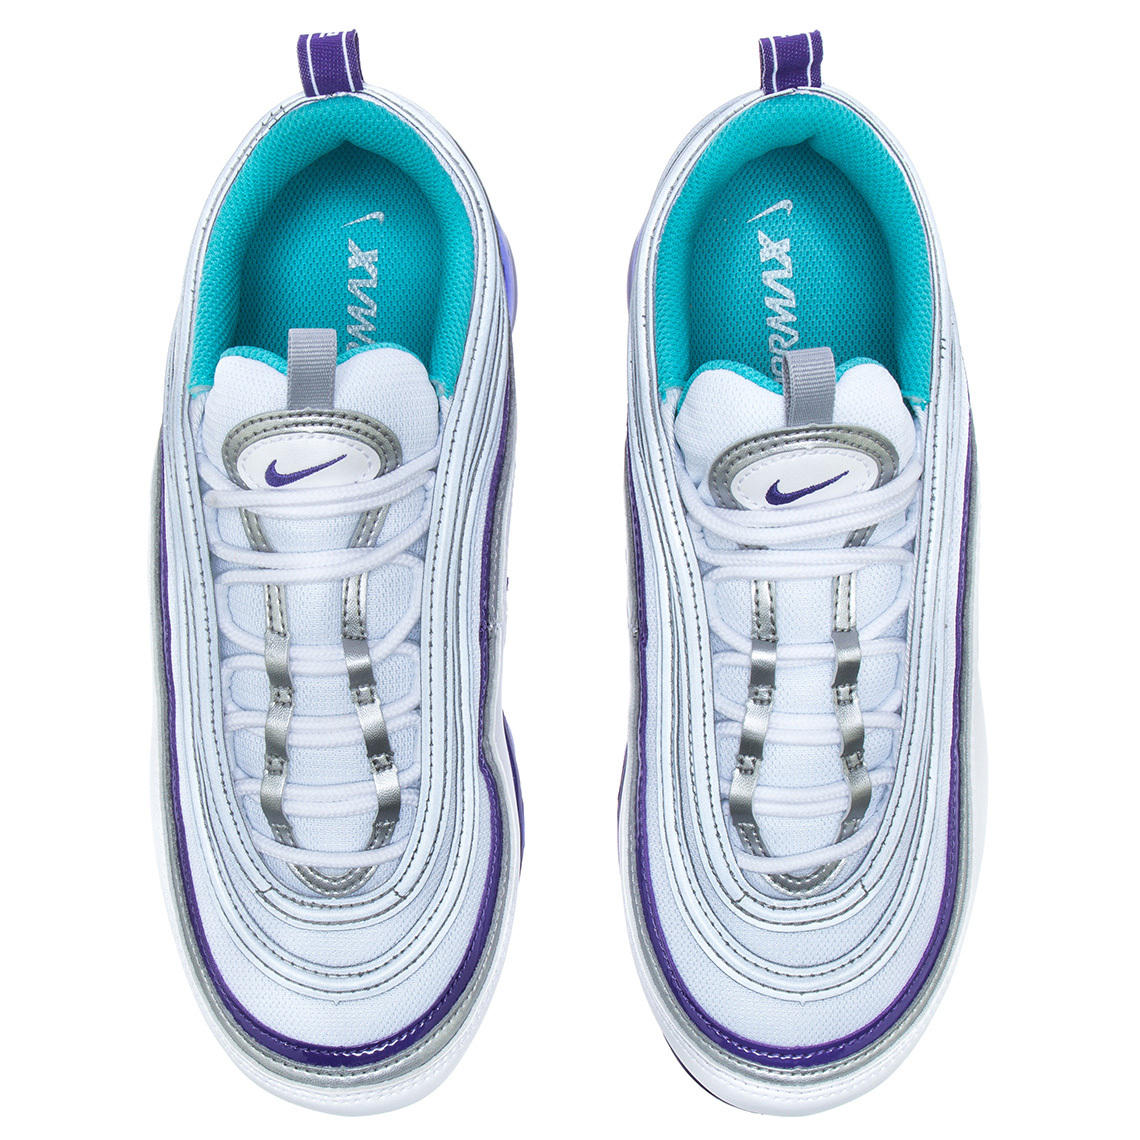 That Juicy 'Grape' Colorway: Nike Air Vapormax 97s